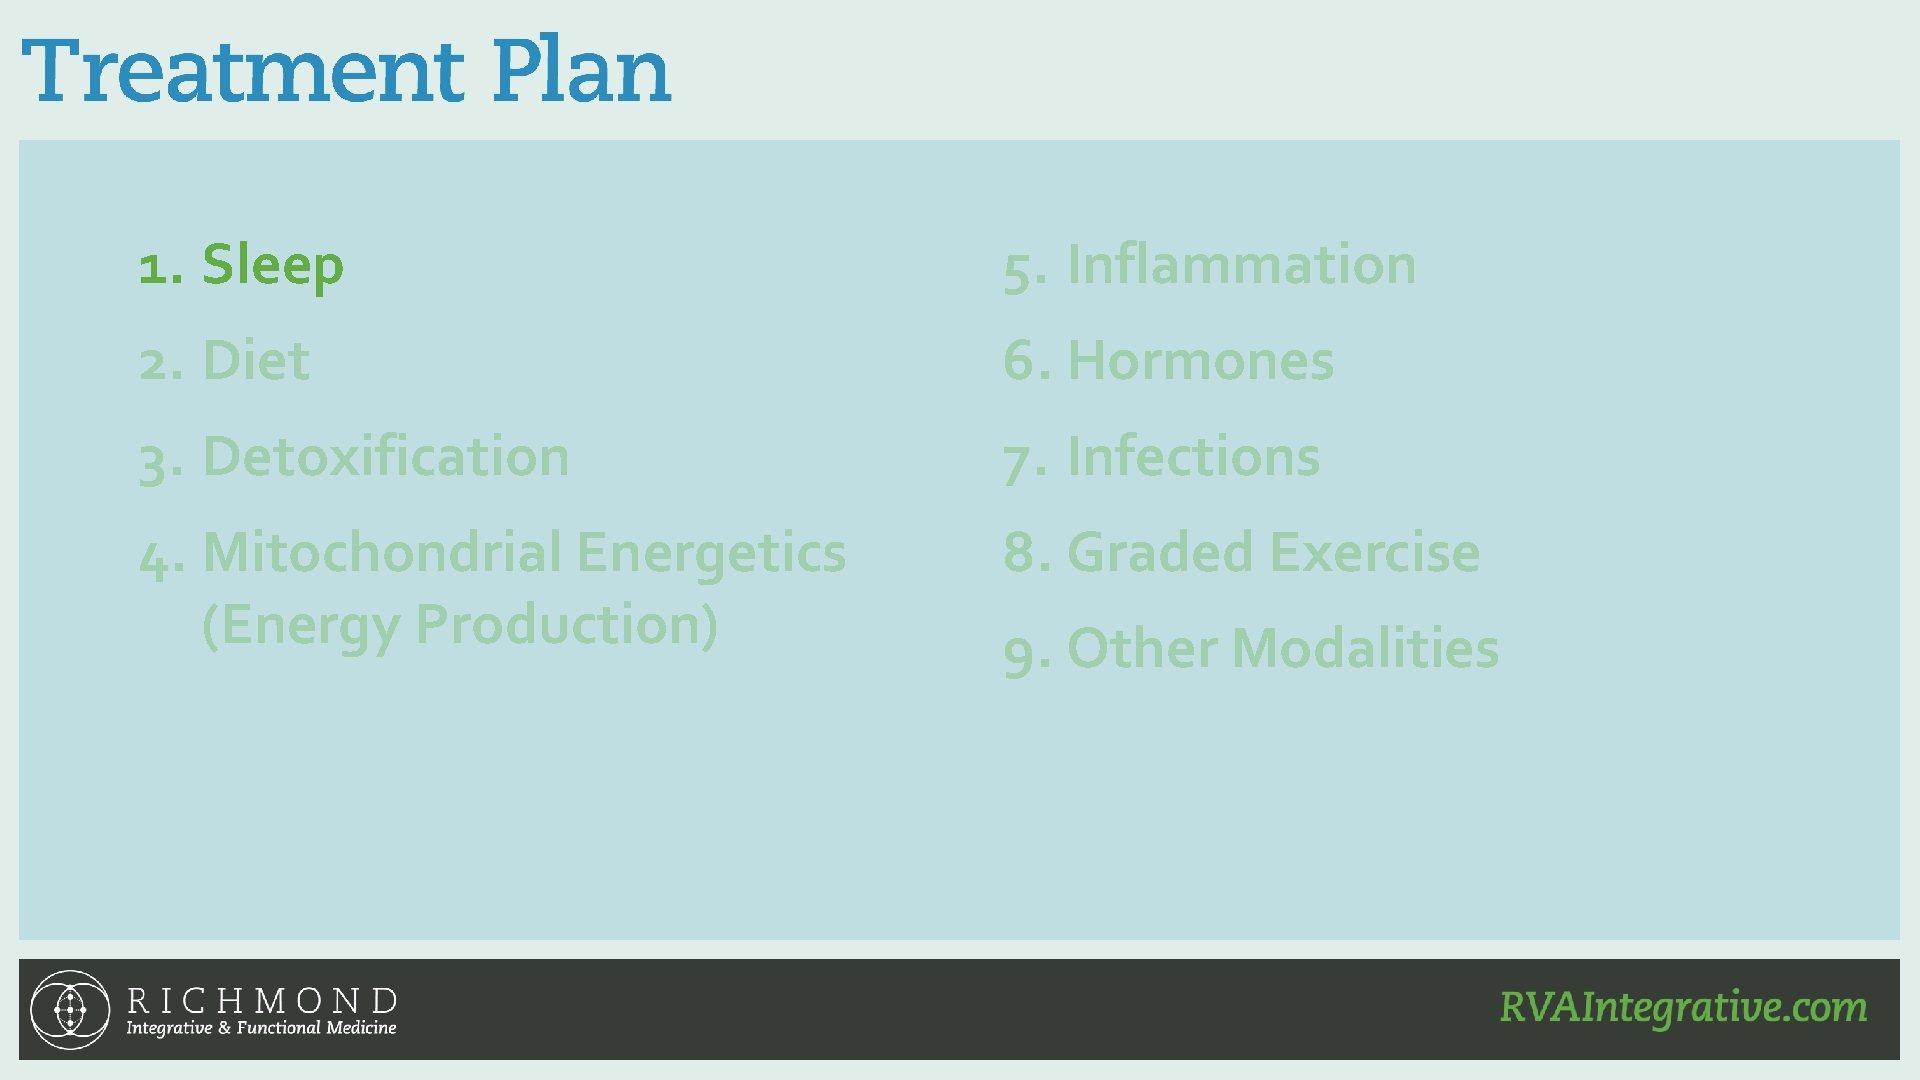 1. Sleep 5. Inflammation 2. Diet 6. Hormones 3. Detoxification 7. Infections 4. Mitochondrial